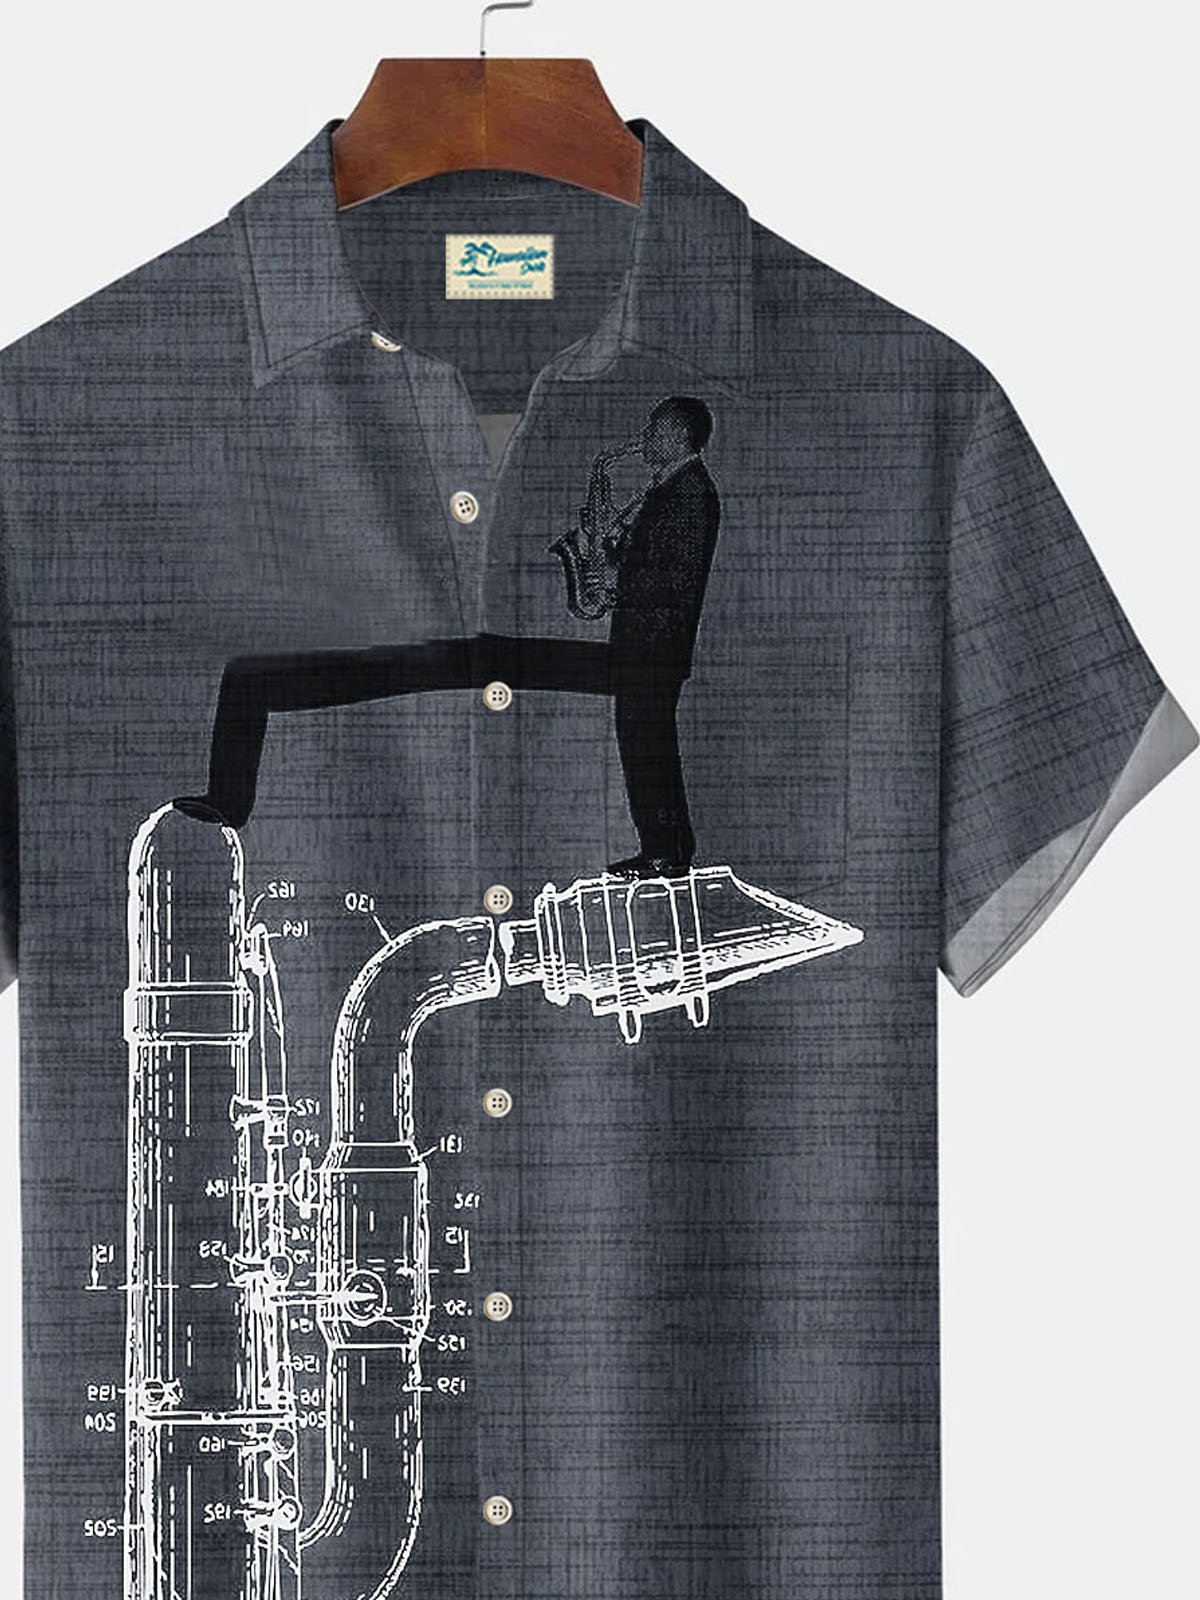 Royaura Music Jazz Saxophone Men's Button Pocket Shirt